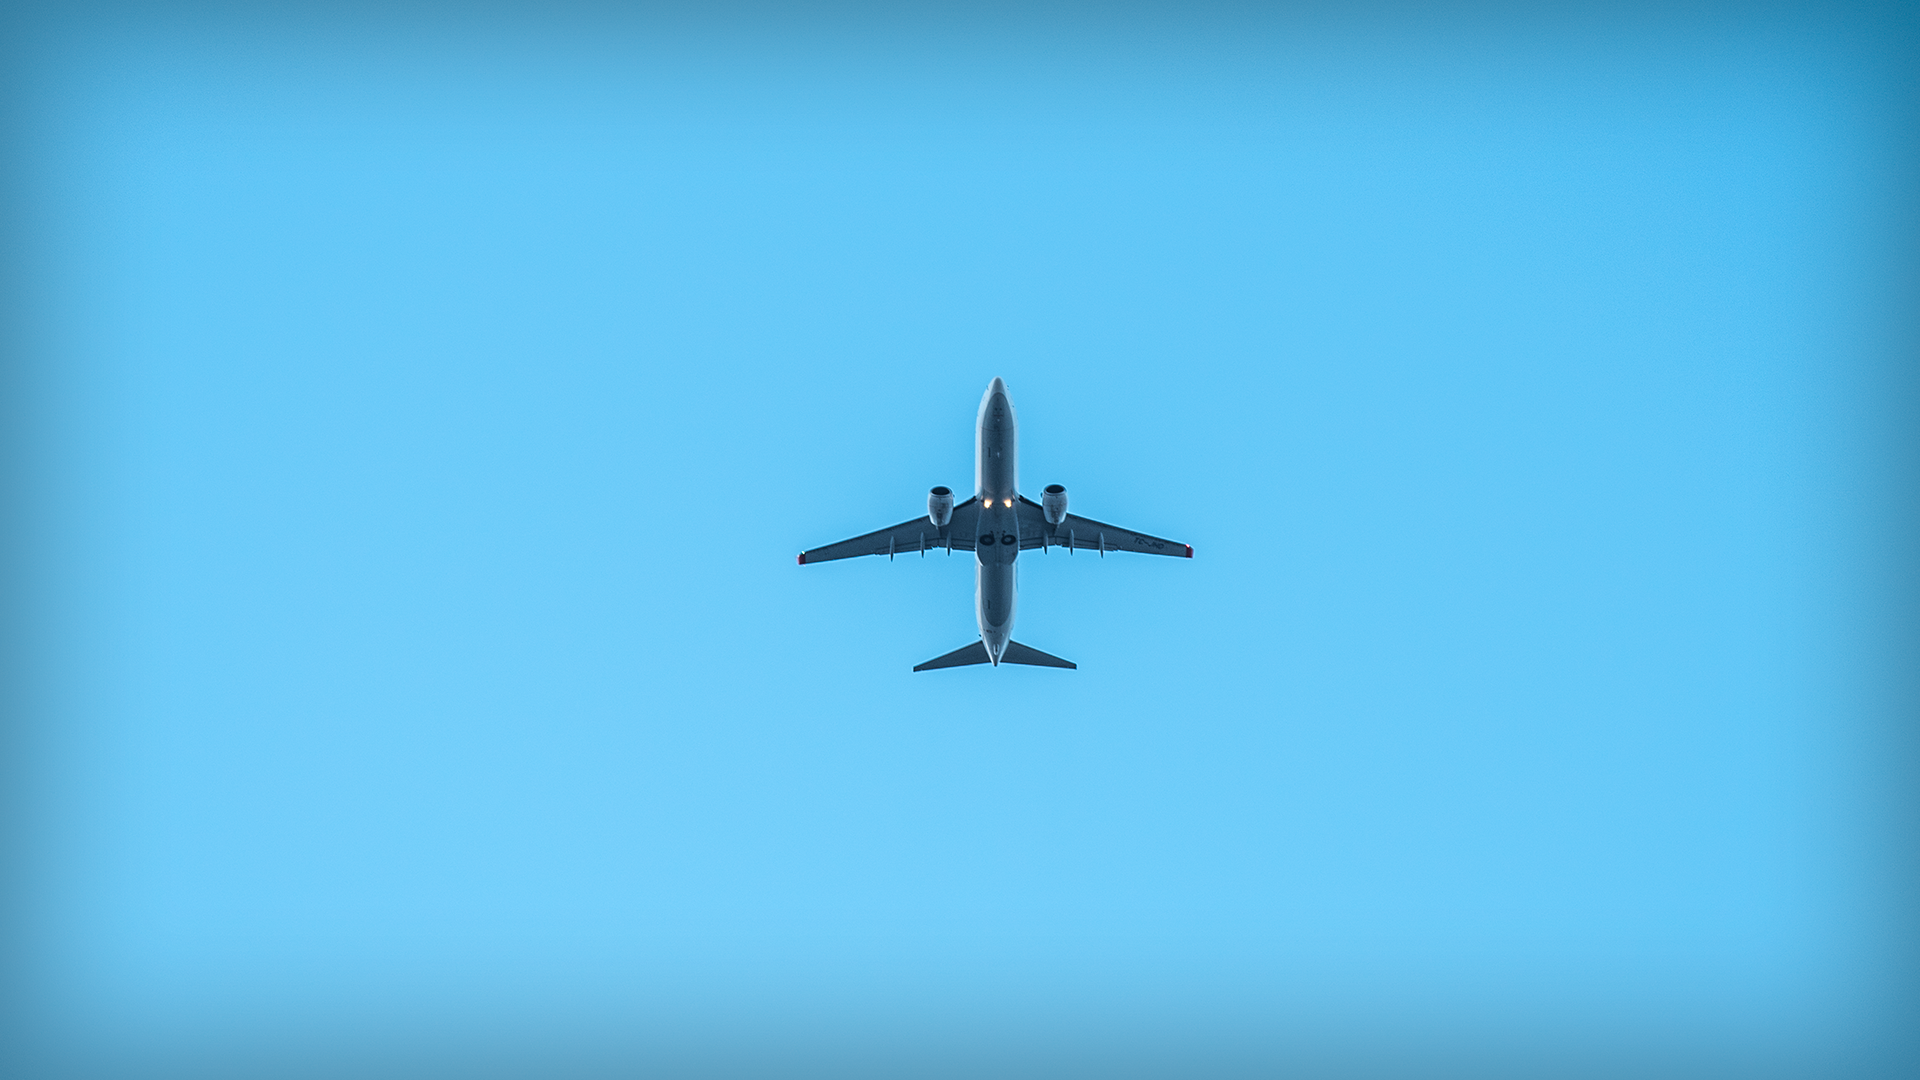 General 1920x1080 airplane Tourism sky blue cyan minimalism aircraft cyan background clear sky vehicle passenger aircraft